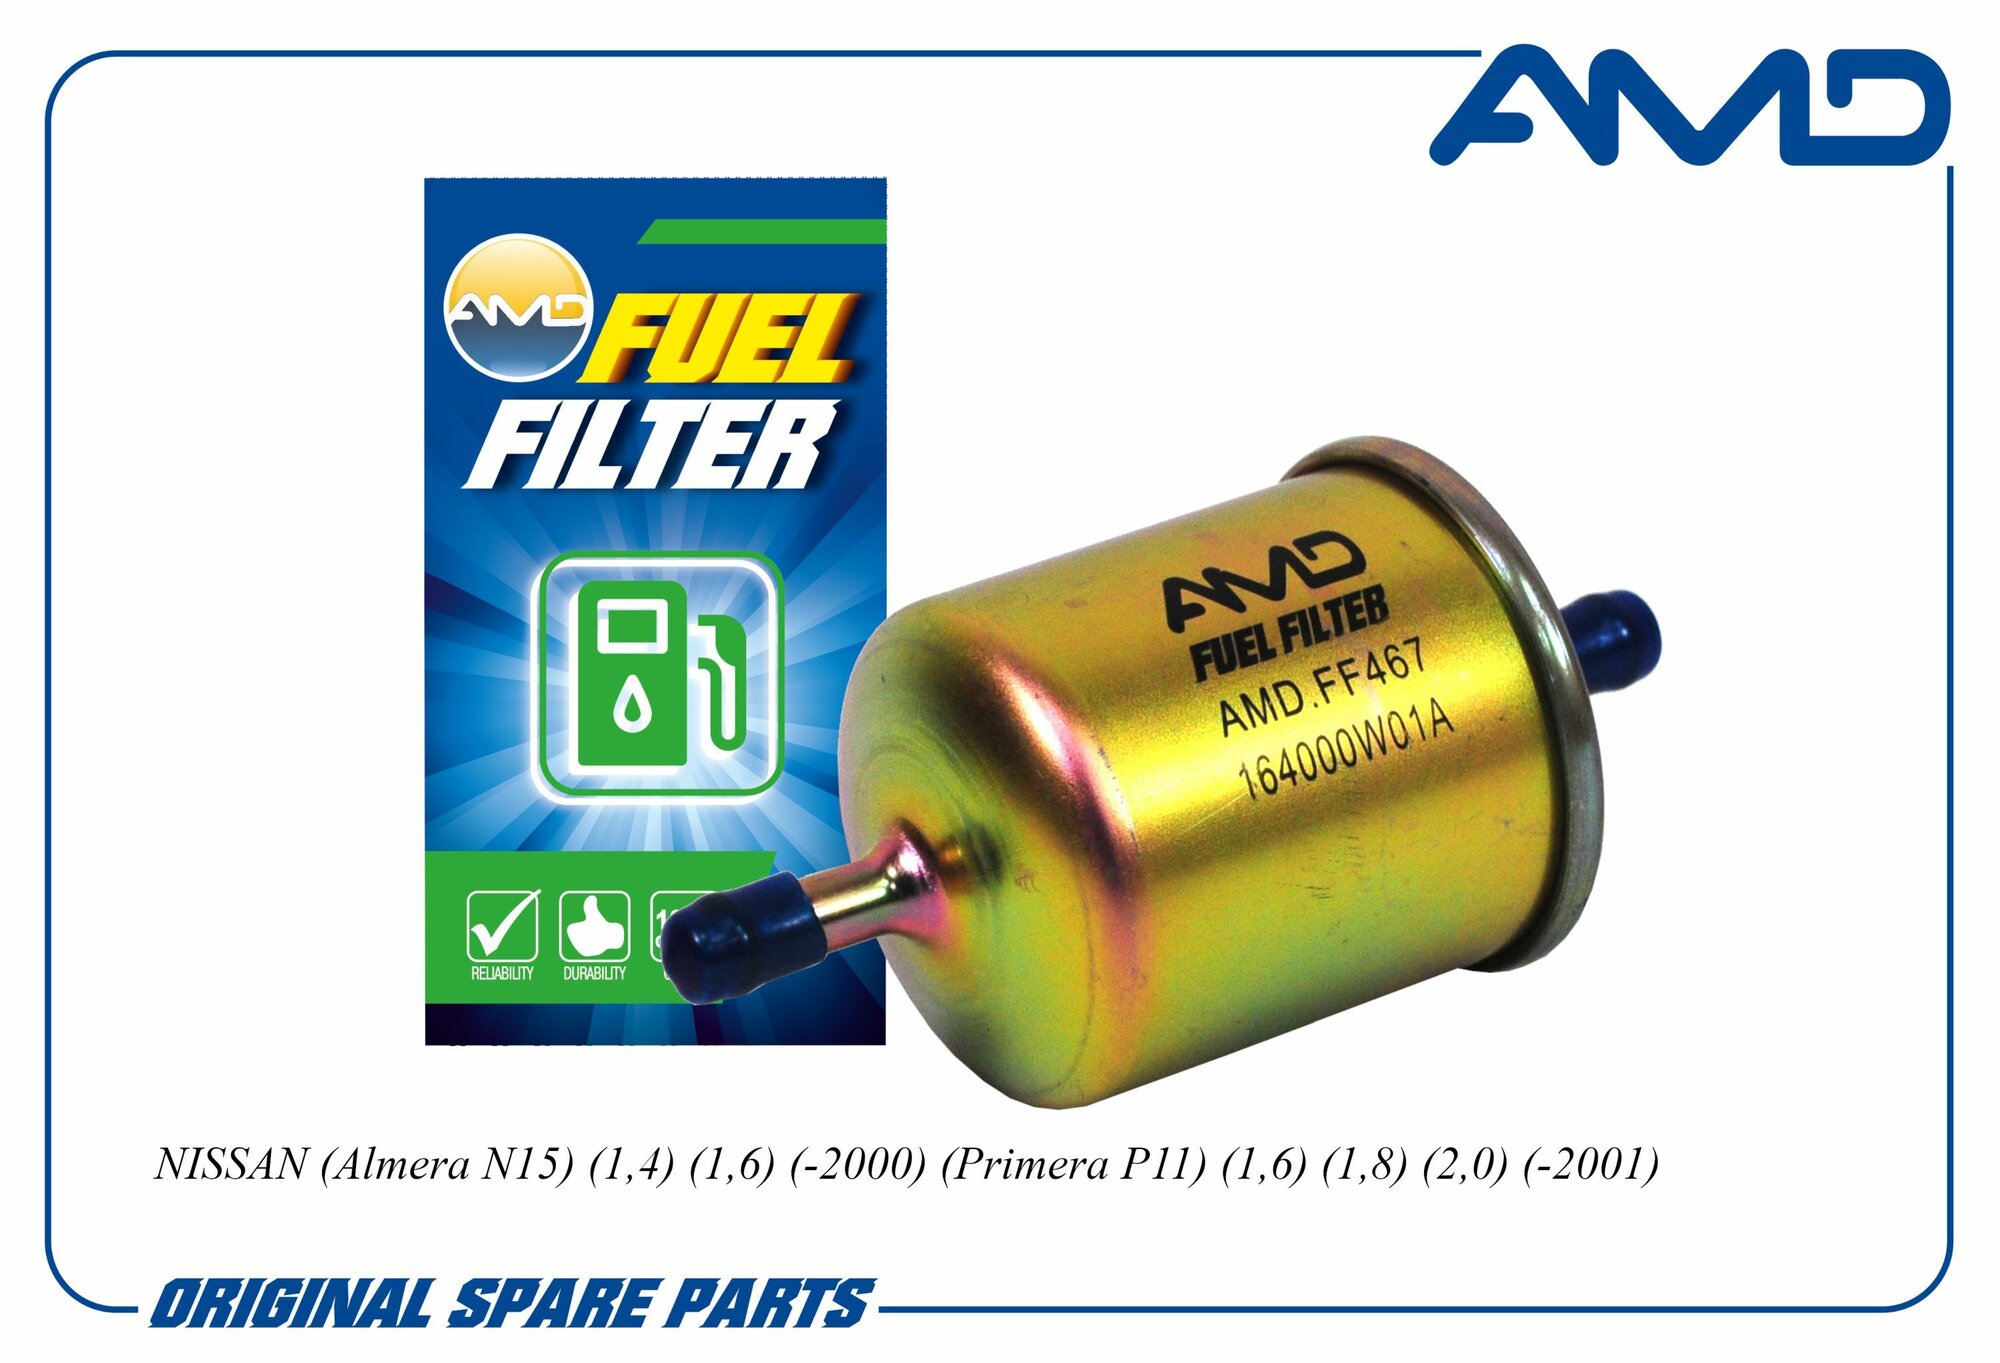 Фильтр топливный 16400-0W01A/AMD. FF467 для NISSAN Almera N15 1,4 1,6 -2000 Primera P11 1,6 1,8 2,0 -2001